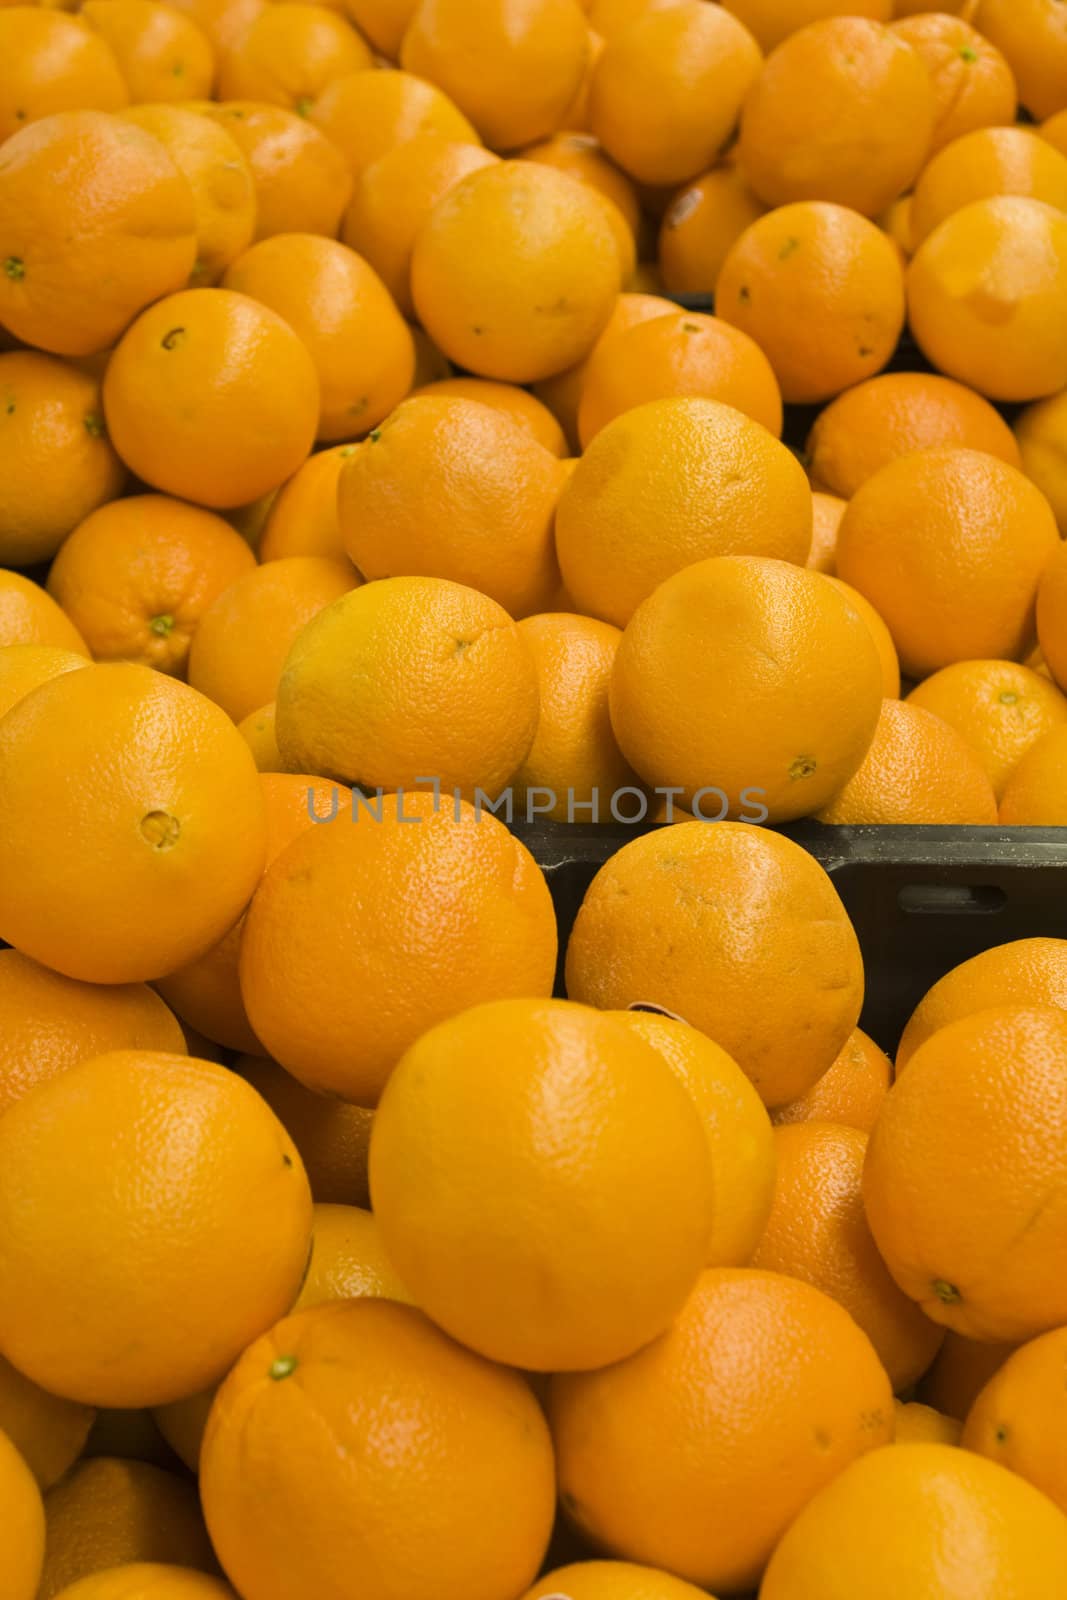 it is a lot of oranges.